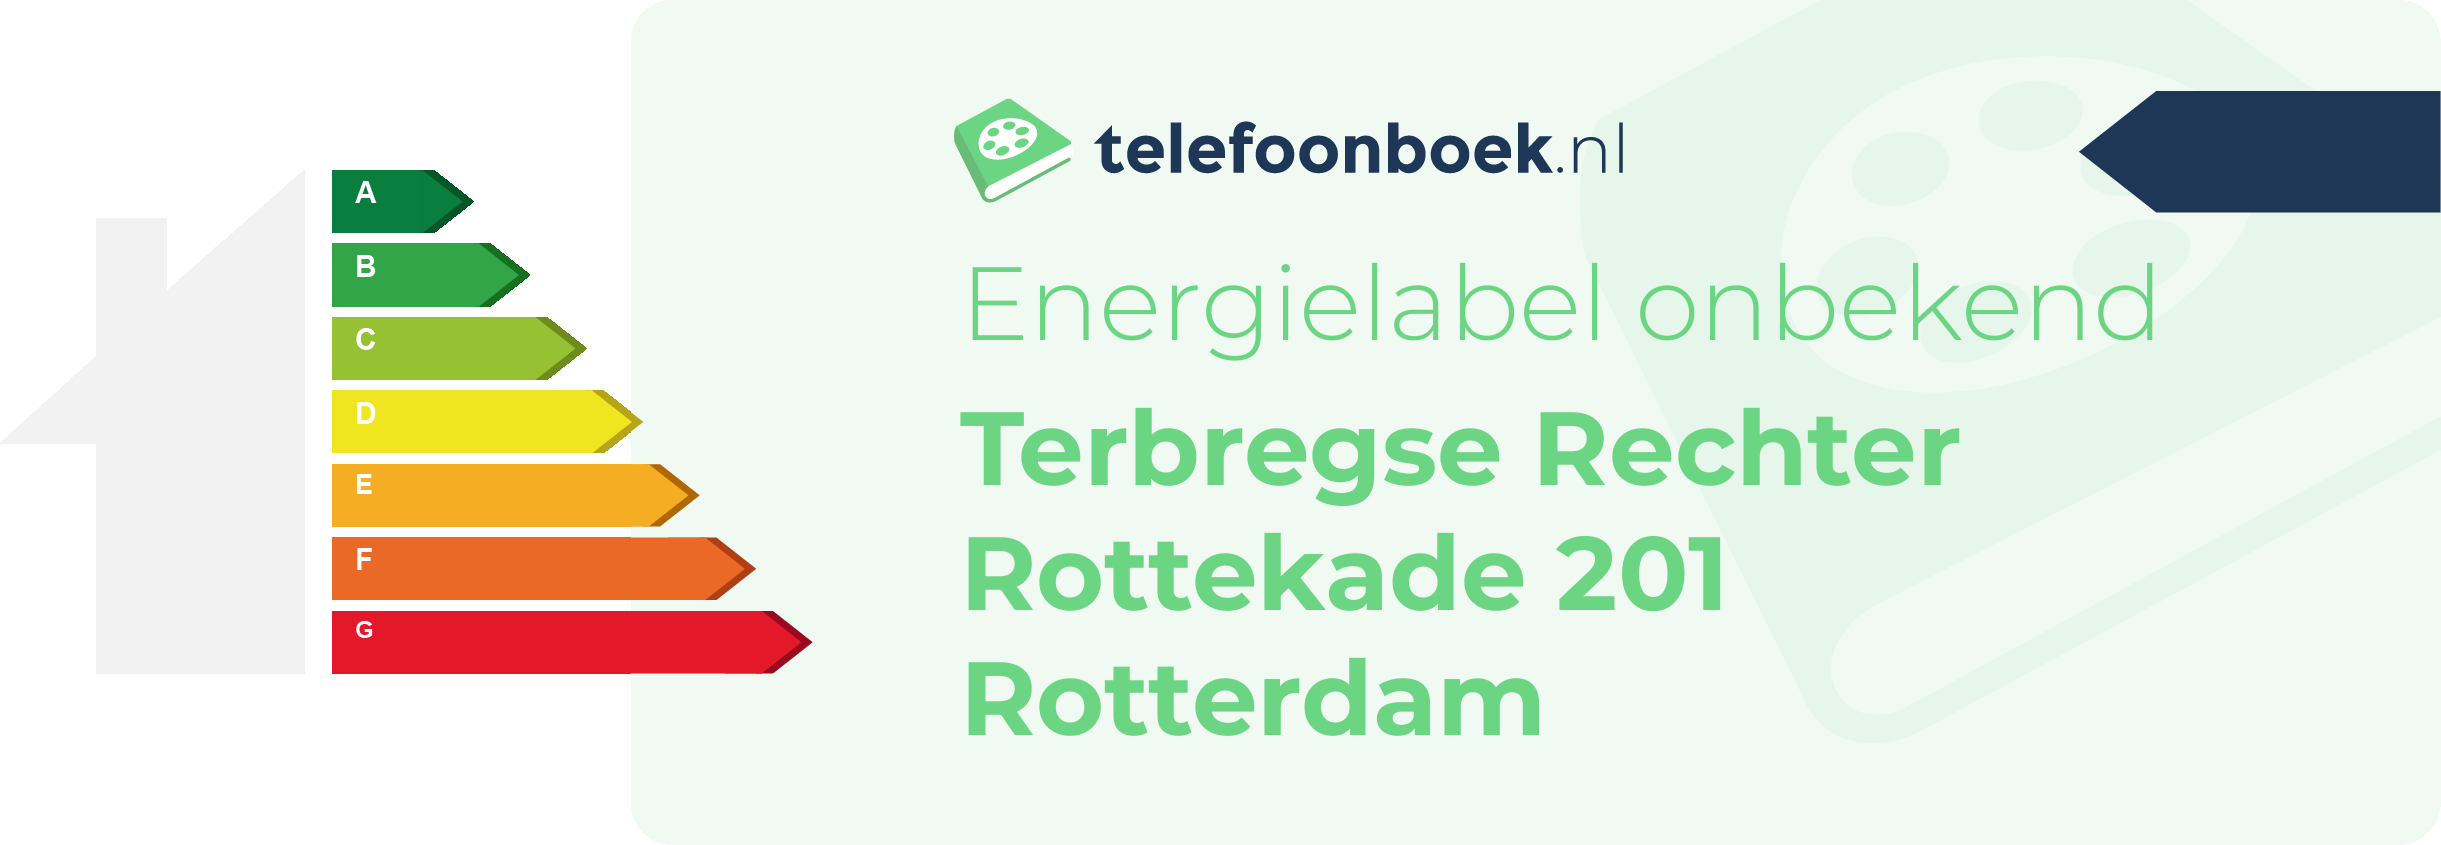 Energielabel Terbregse Rechter Rottekade 201 Rotterdam